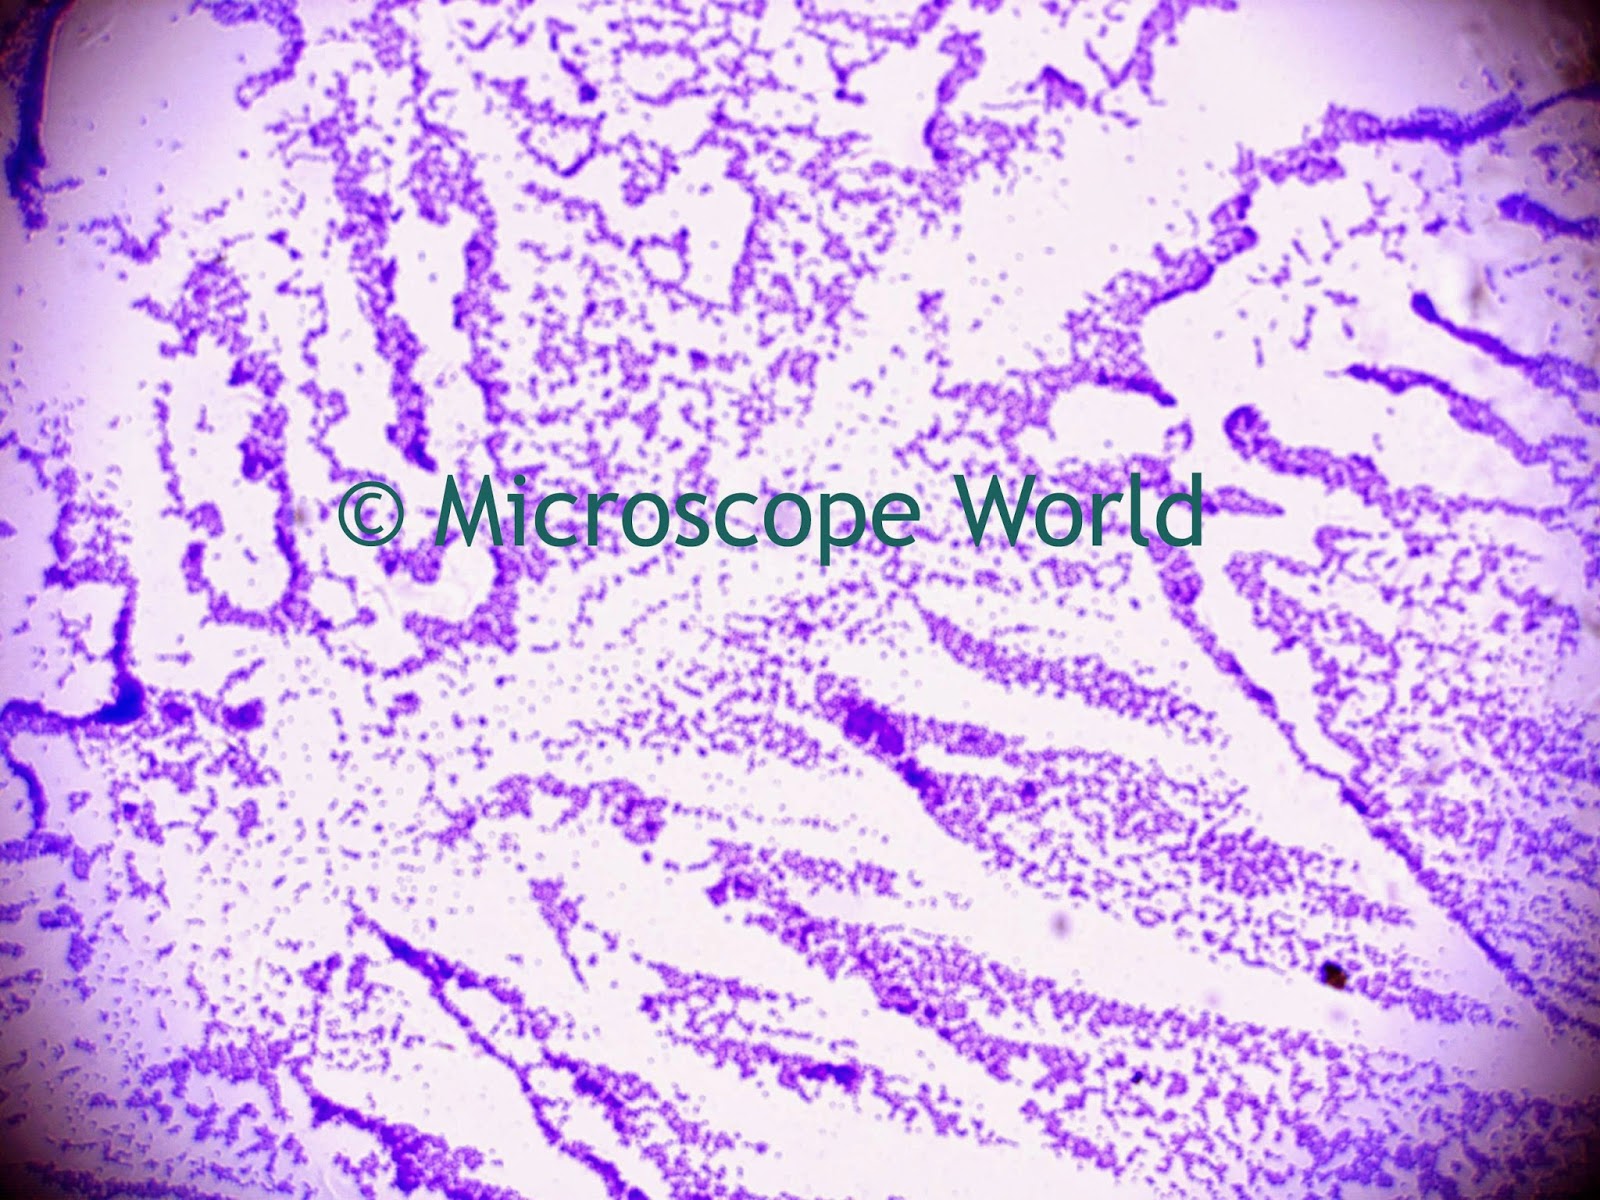 400x microscope image of bacteria